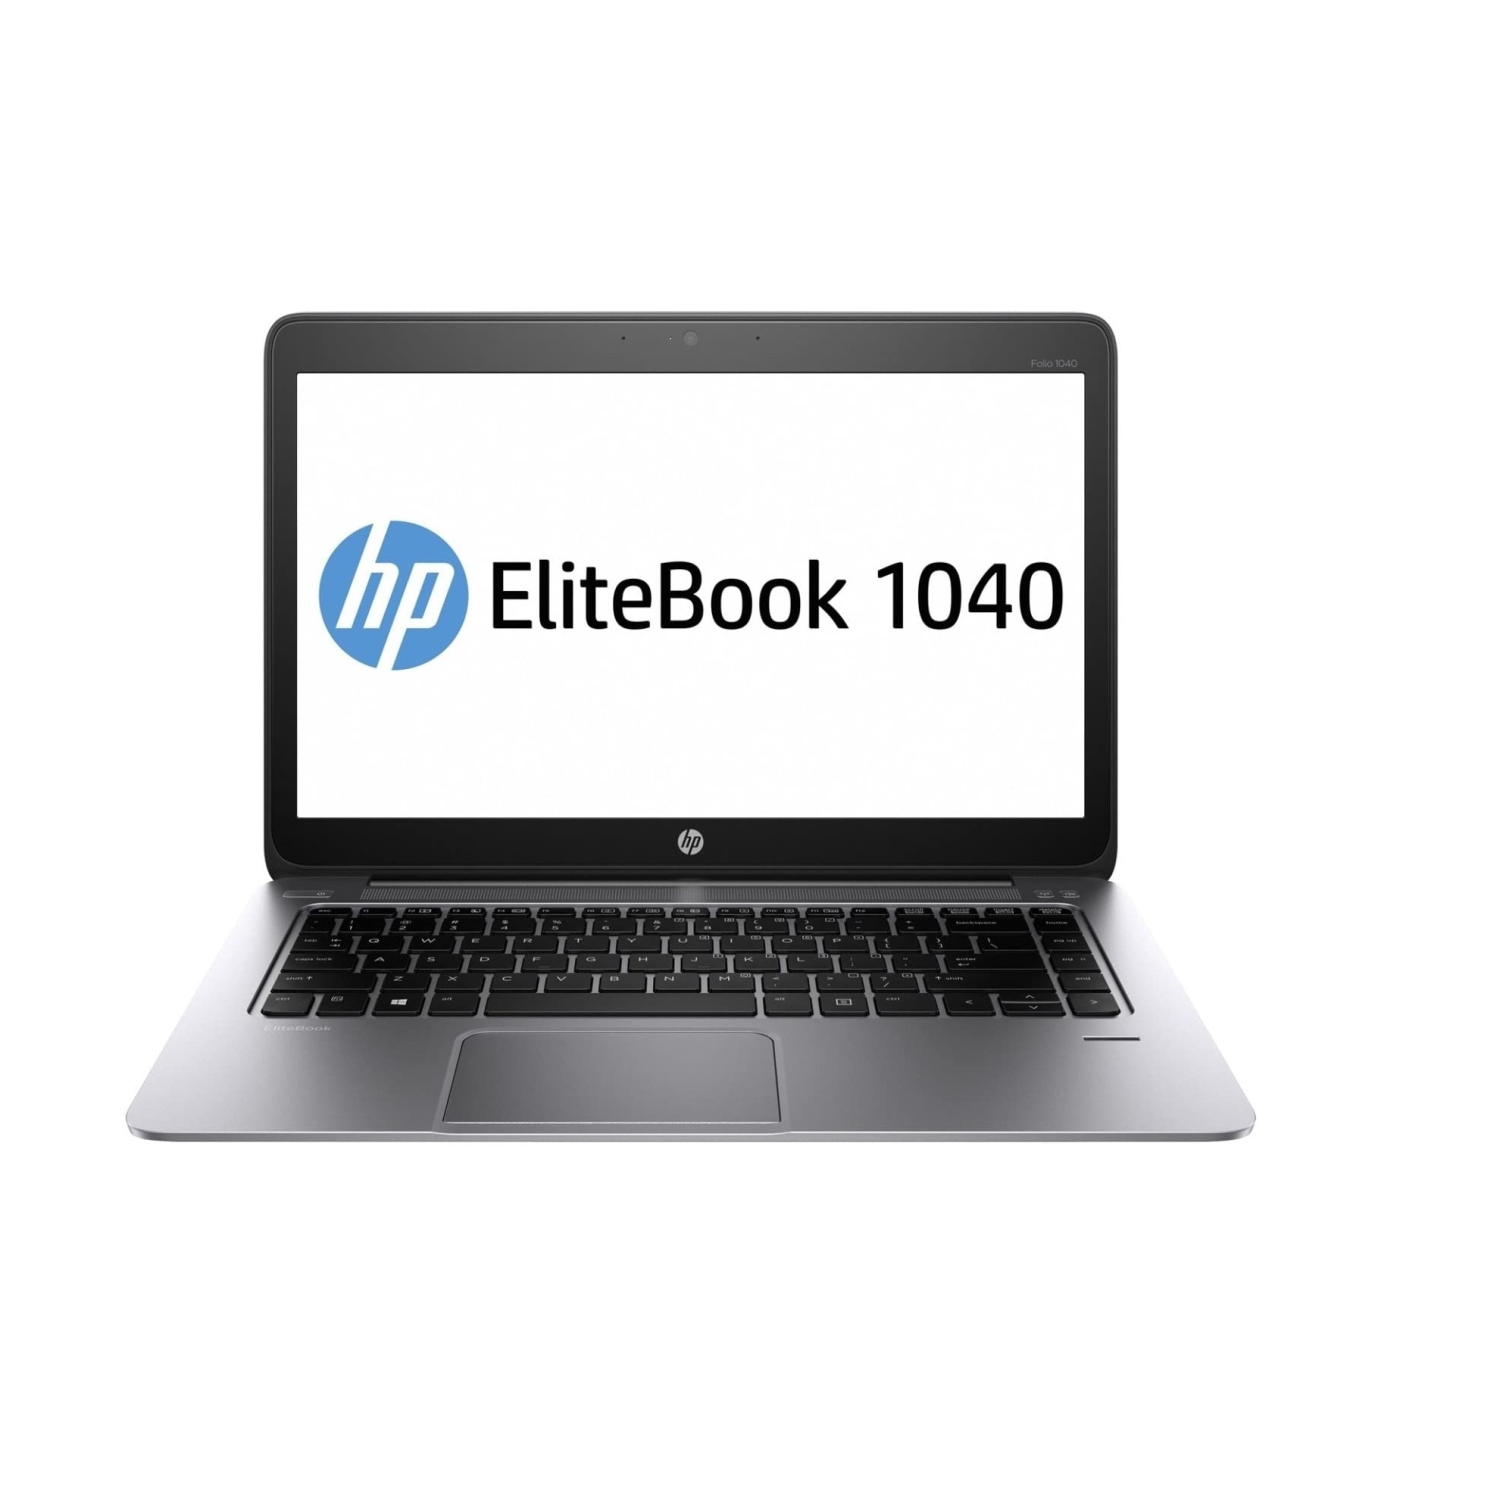 Refurbished (Good) - HP EliteBook Folio 1040 G1 - i7 4650U - 8Gb RAM - 256Gb SSD - Intel HD Graphics 5000 - Windows 10 Professional - 1 Year Warranty